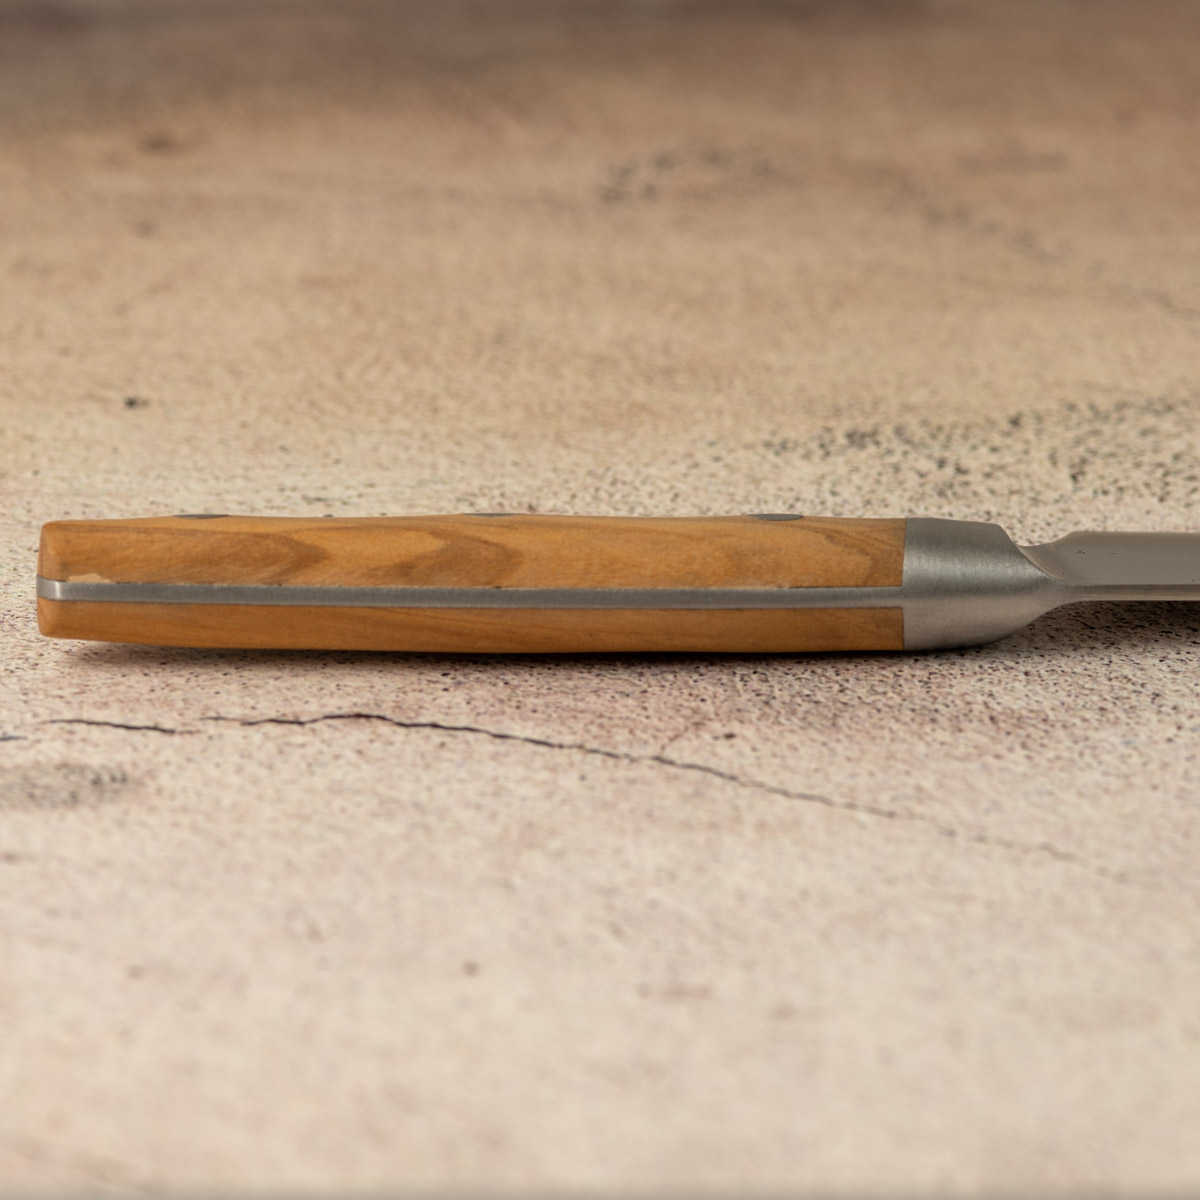 Nakano chef knife with full-tang construction.